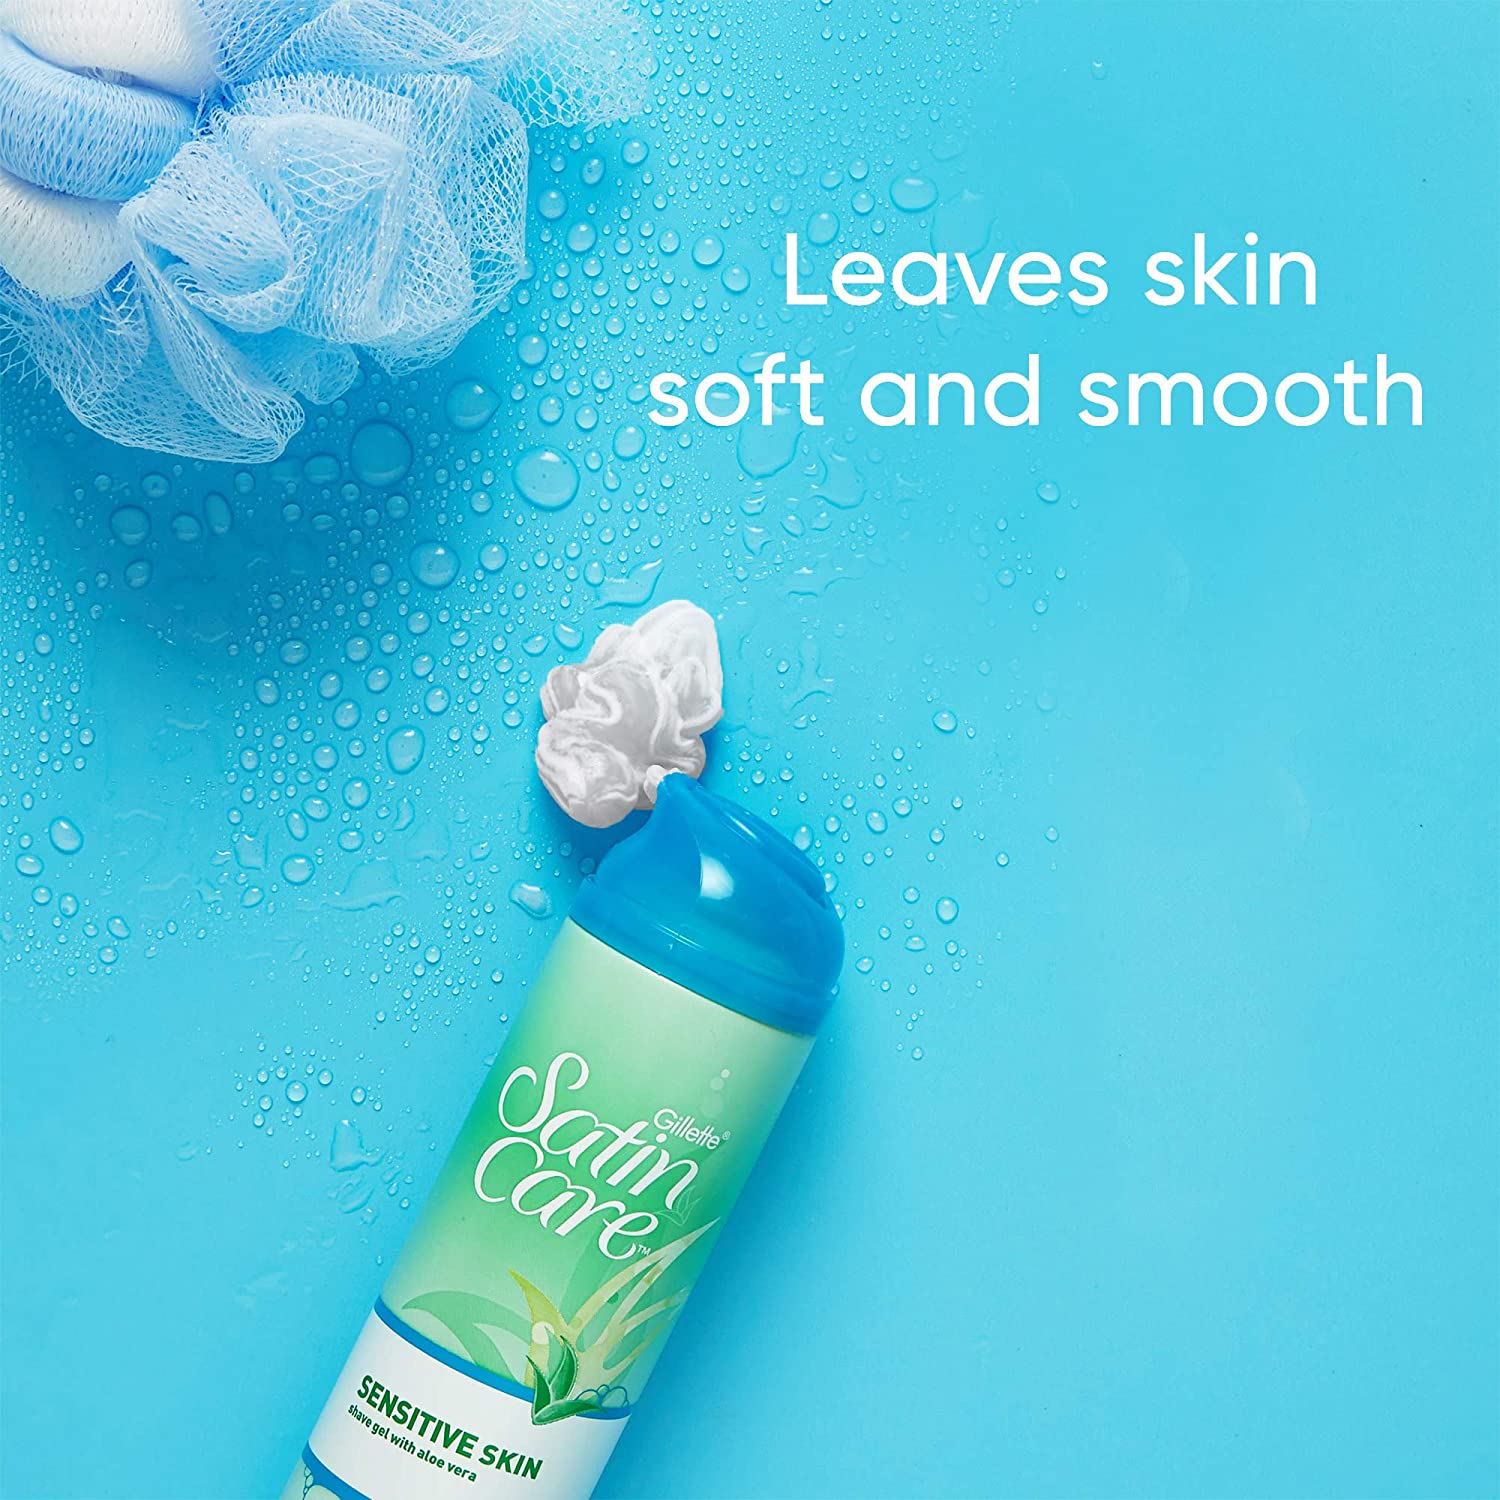 Gillette Venus SatinCare SENSITIVE SKIN shave gel with aloe vera -195g